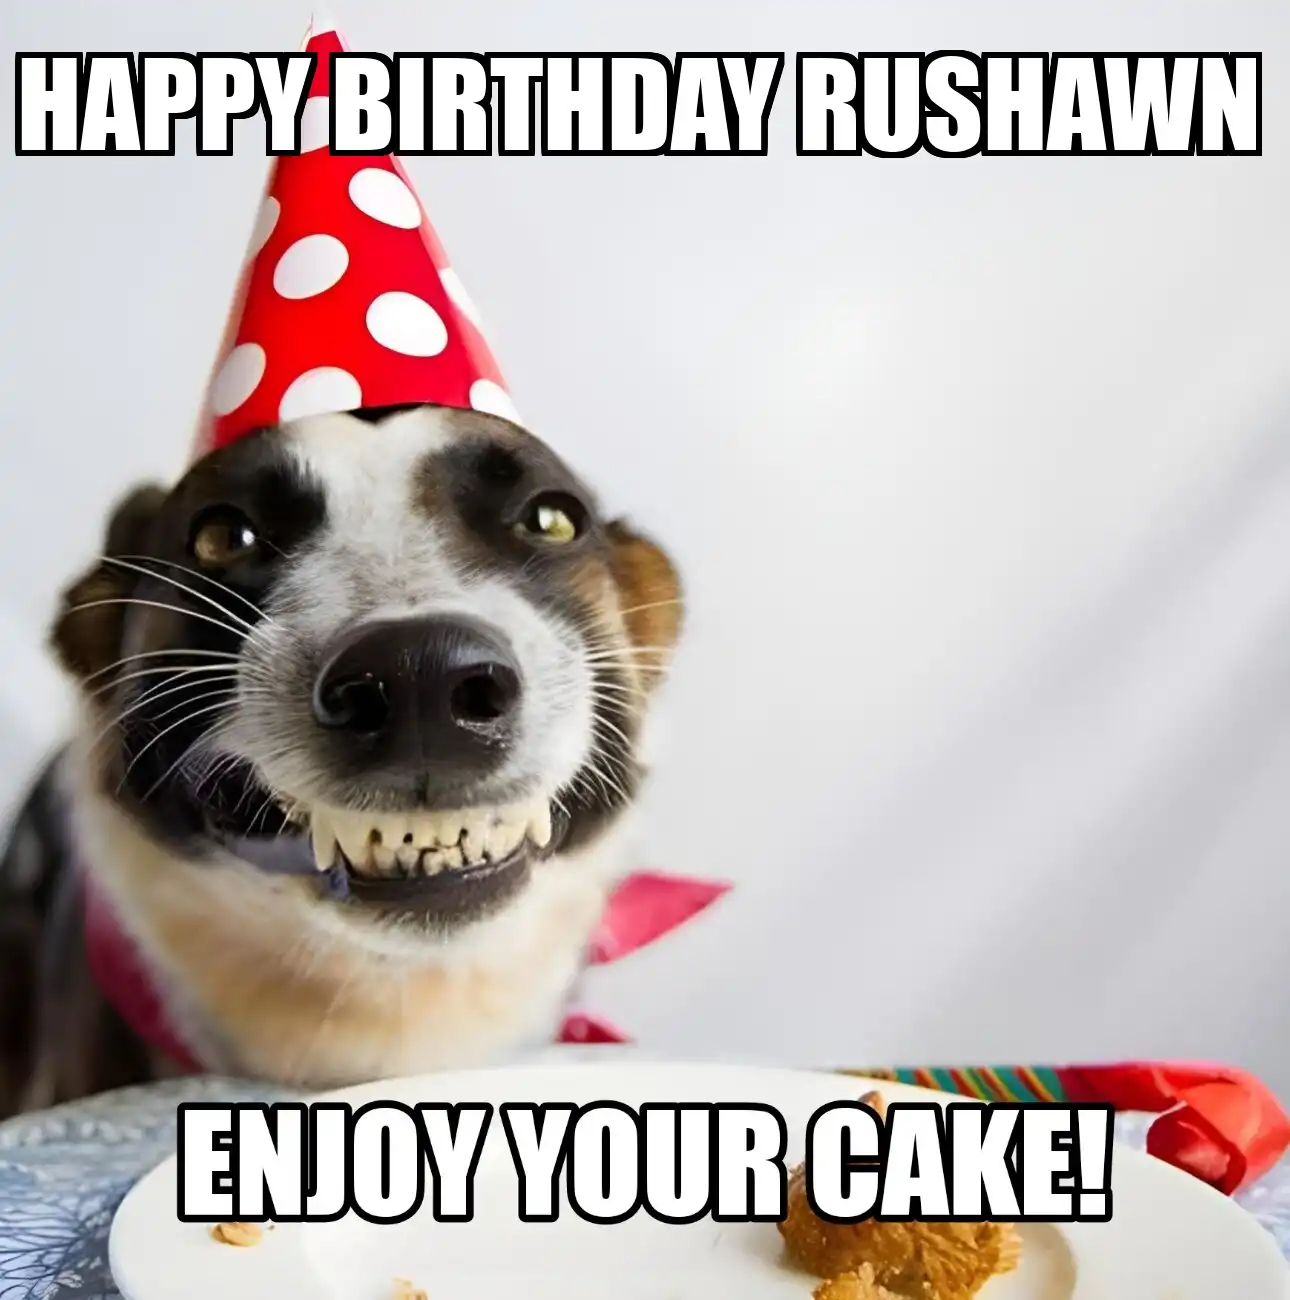 Happy Birthday Rushawn Enjoy Your Cake Dog Meme